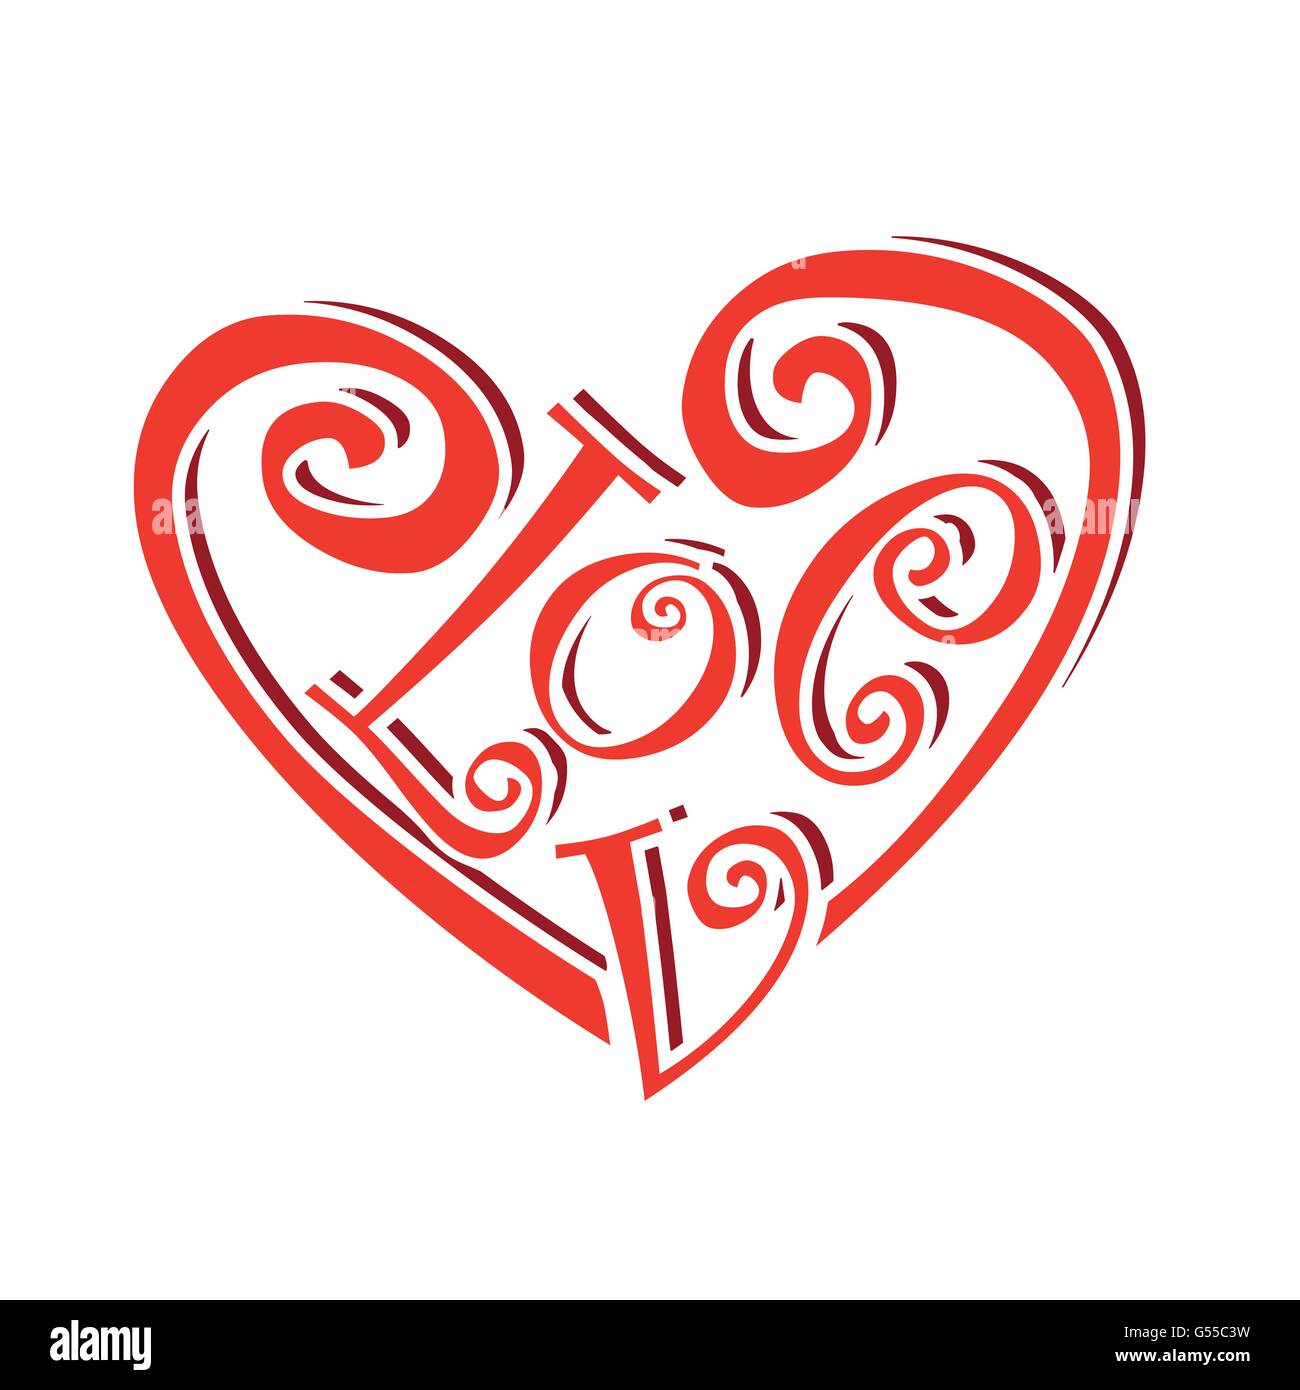 Herz-Symboltext Liebe Konzept Valentinstag Caligraphic Schriftzug Vektor-illustration Stock Vektor